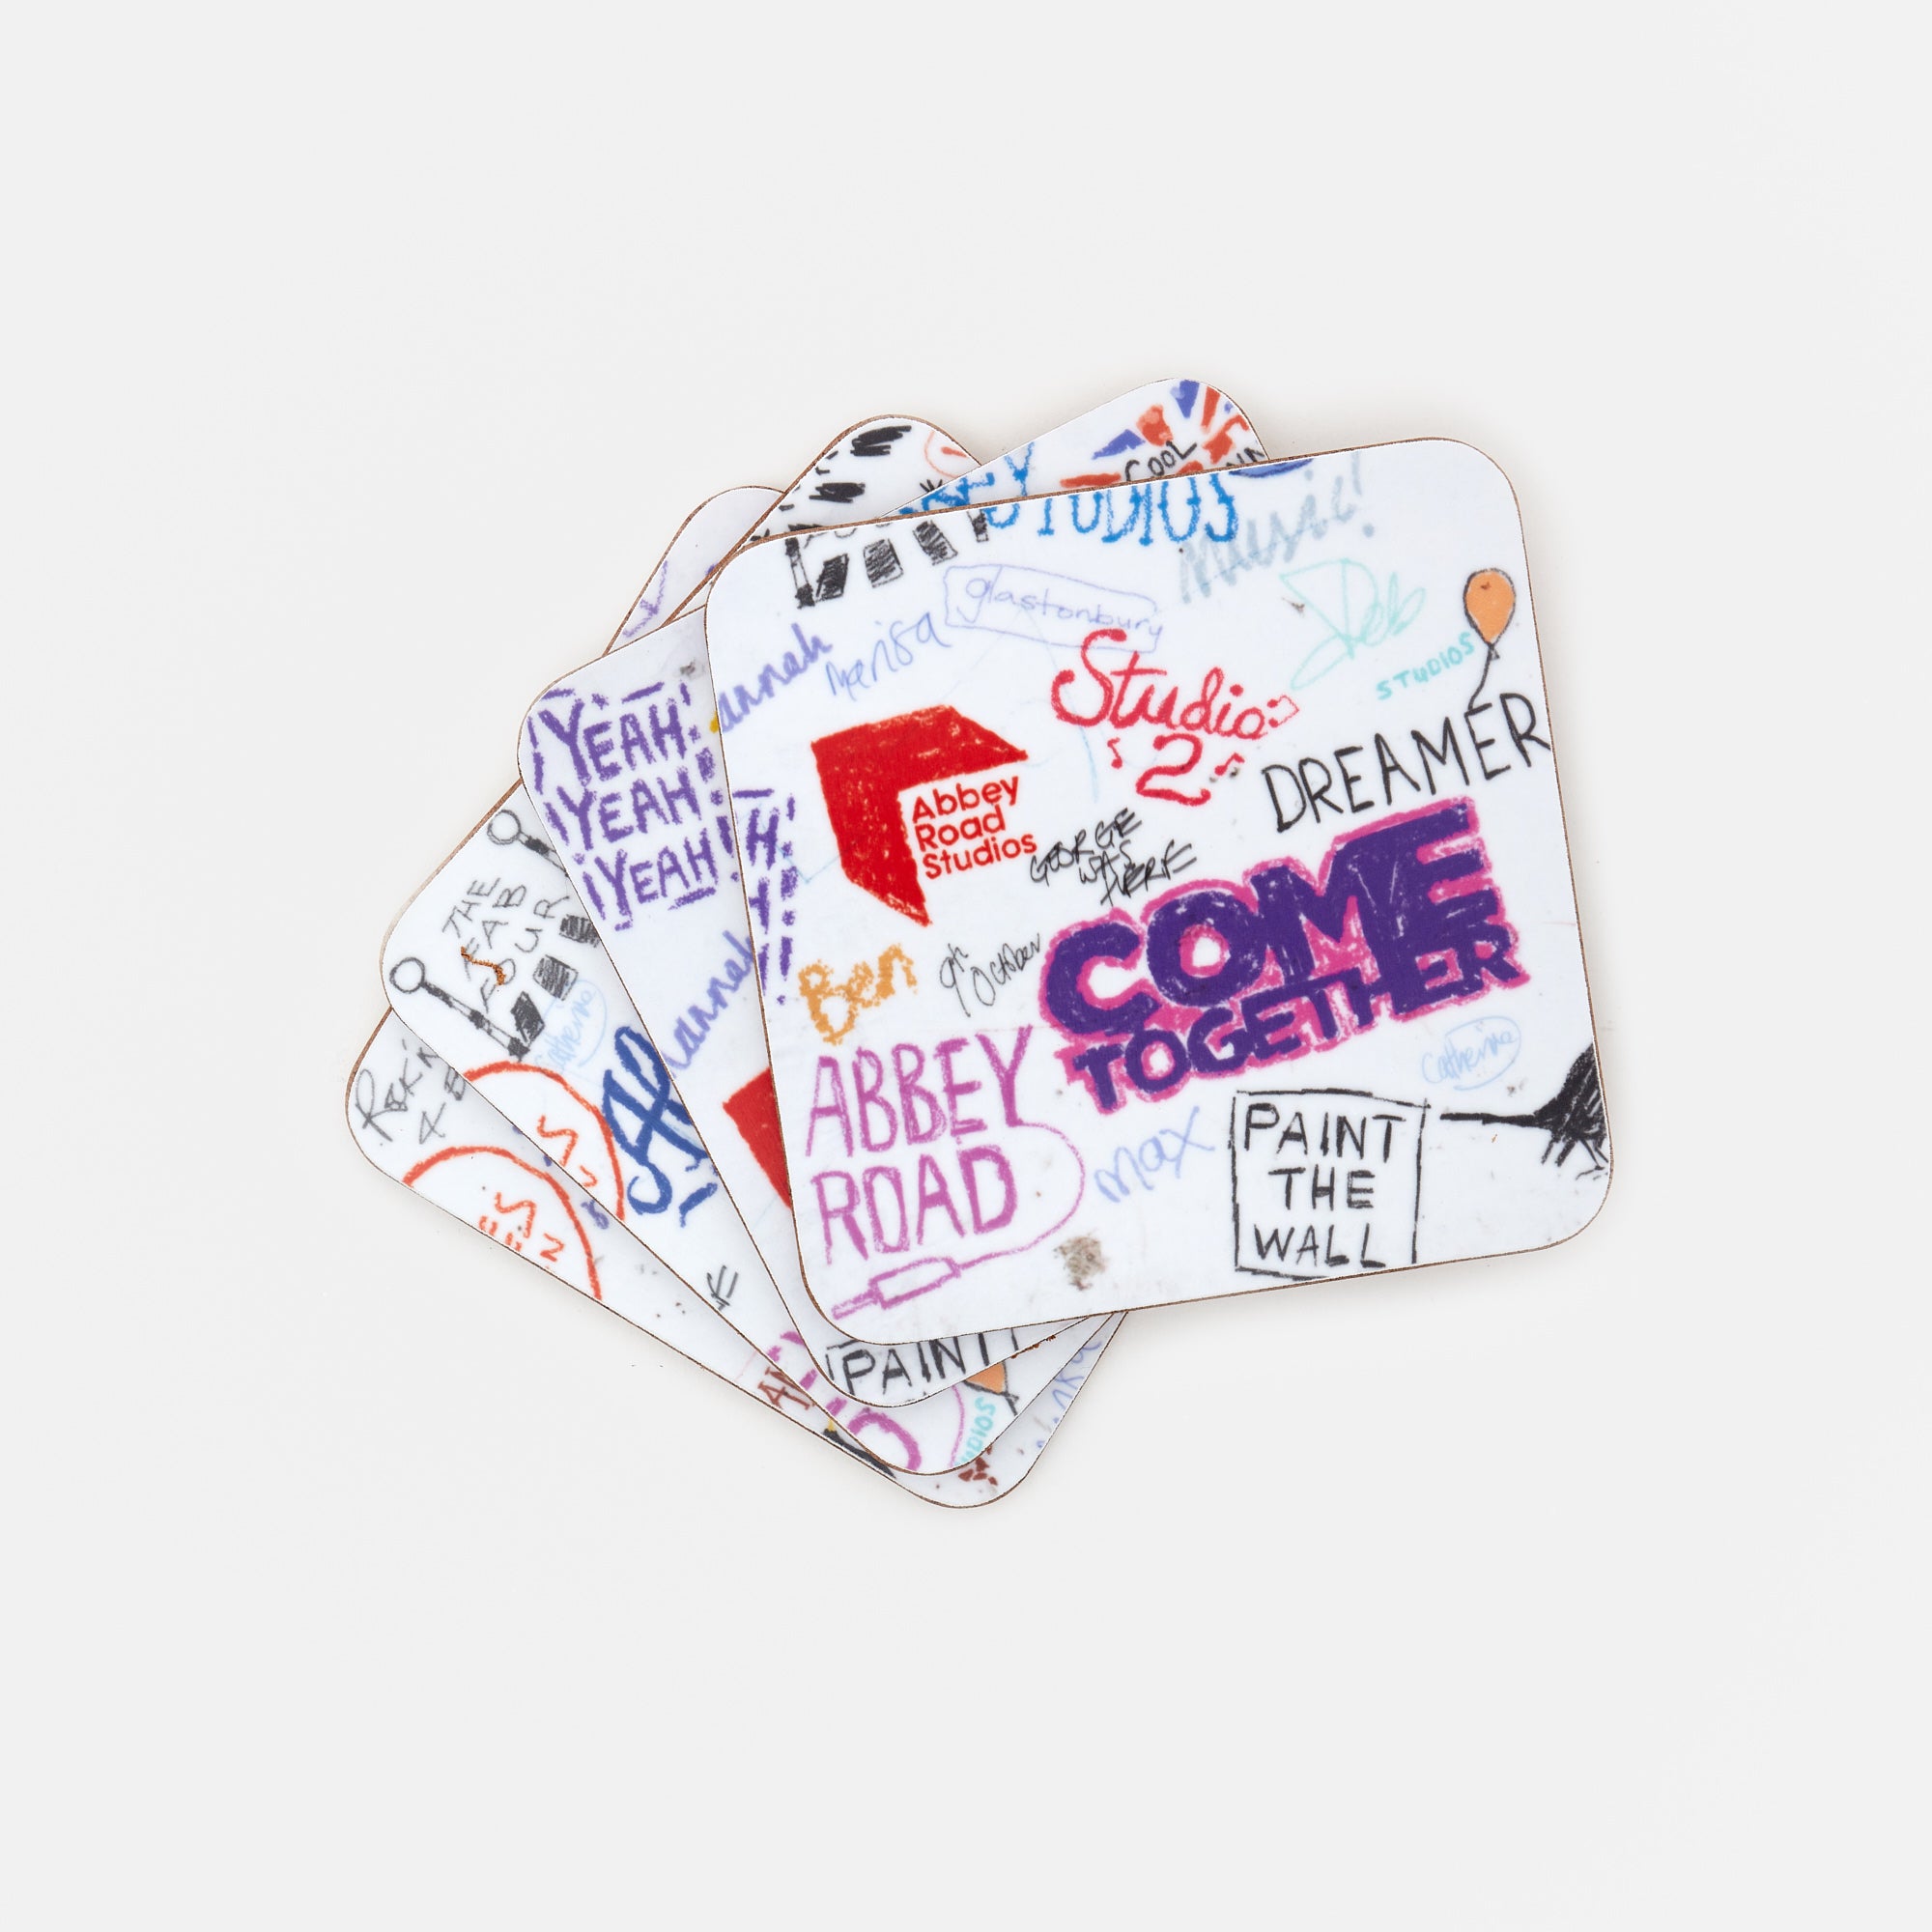 Abbey Road Studios - Abbey Road Graffiti Coaster Set of 4